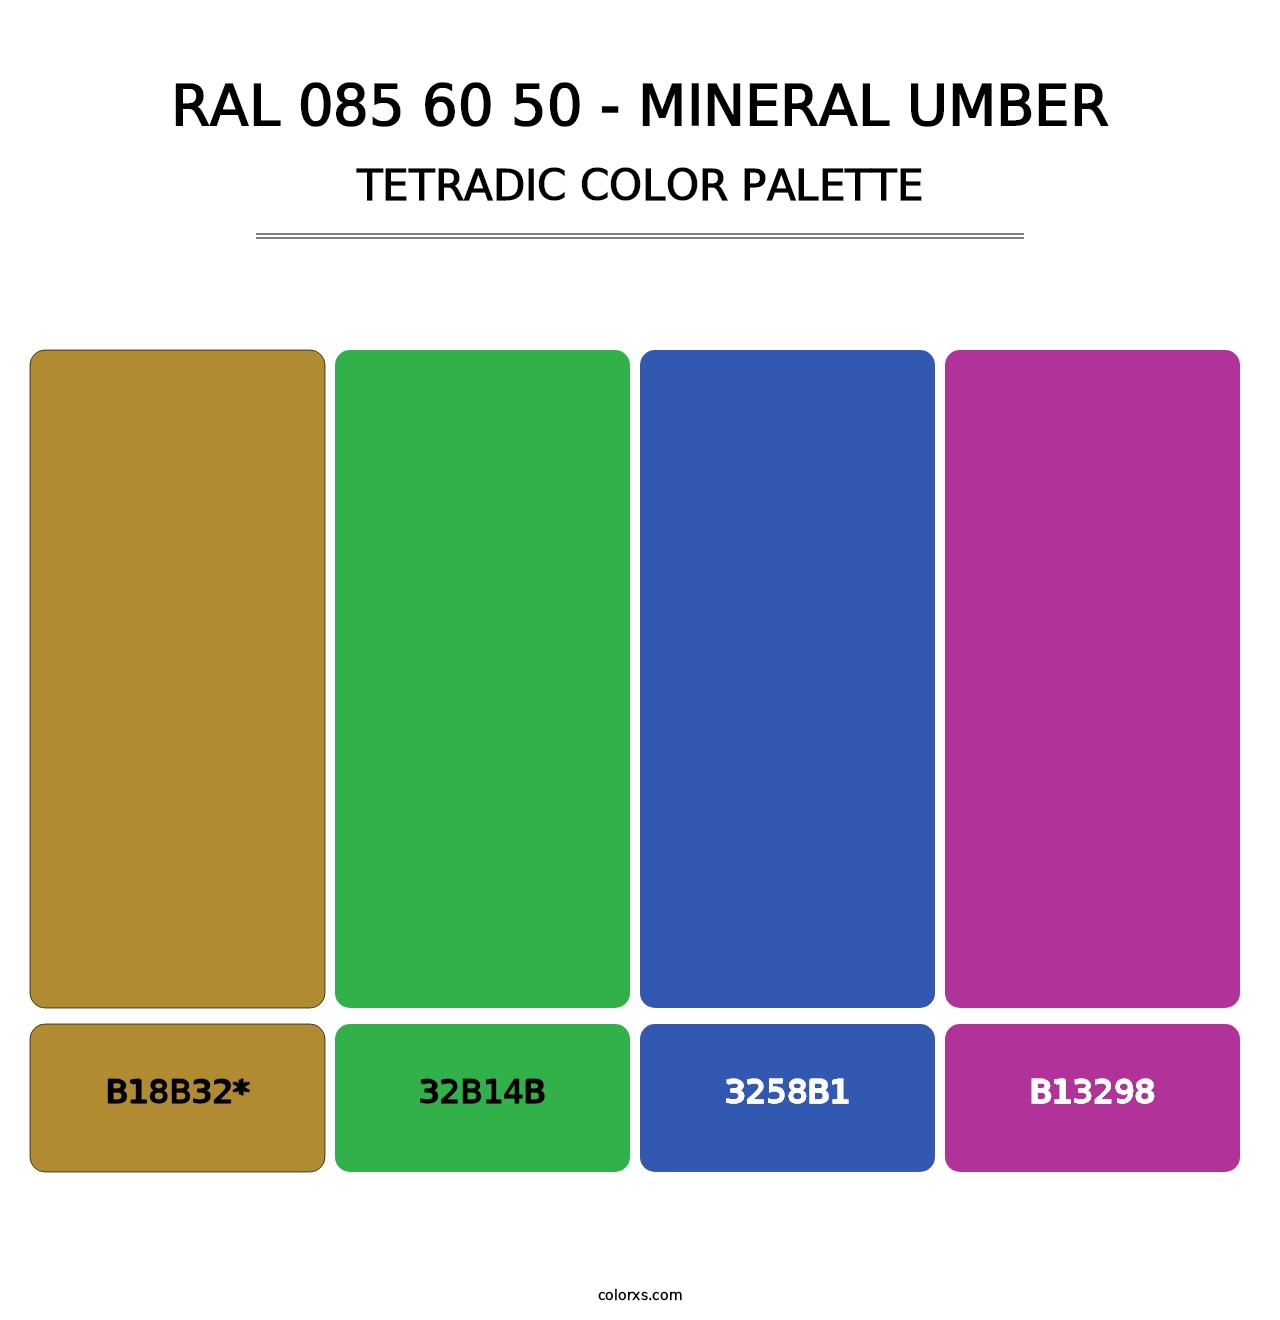 RAL 085 60 50 - Mineral Umber - Tetradic Color Palette